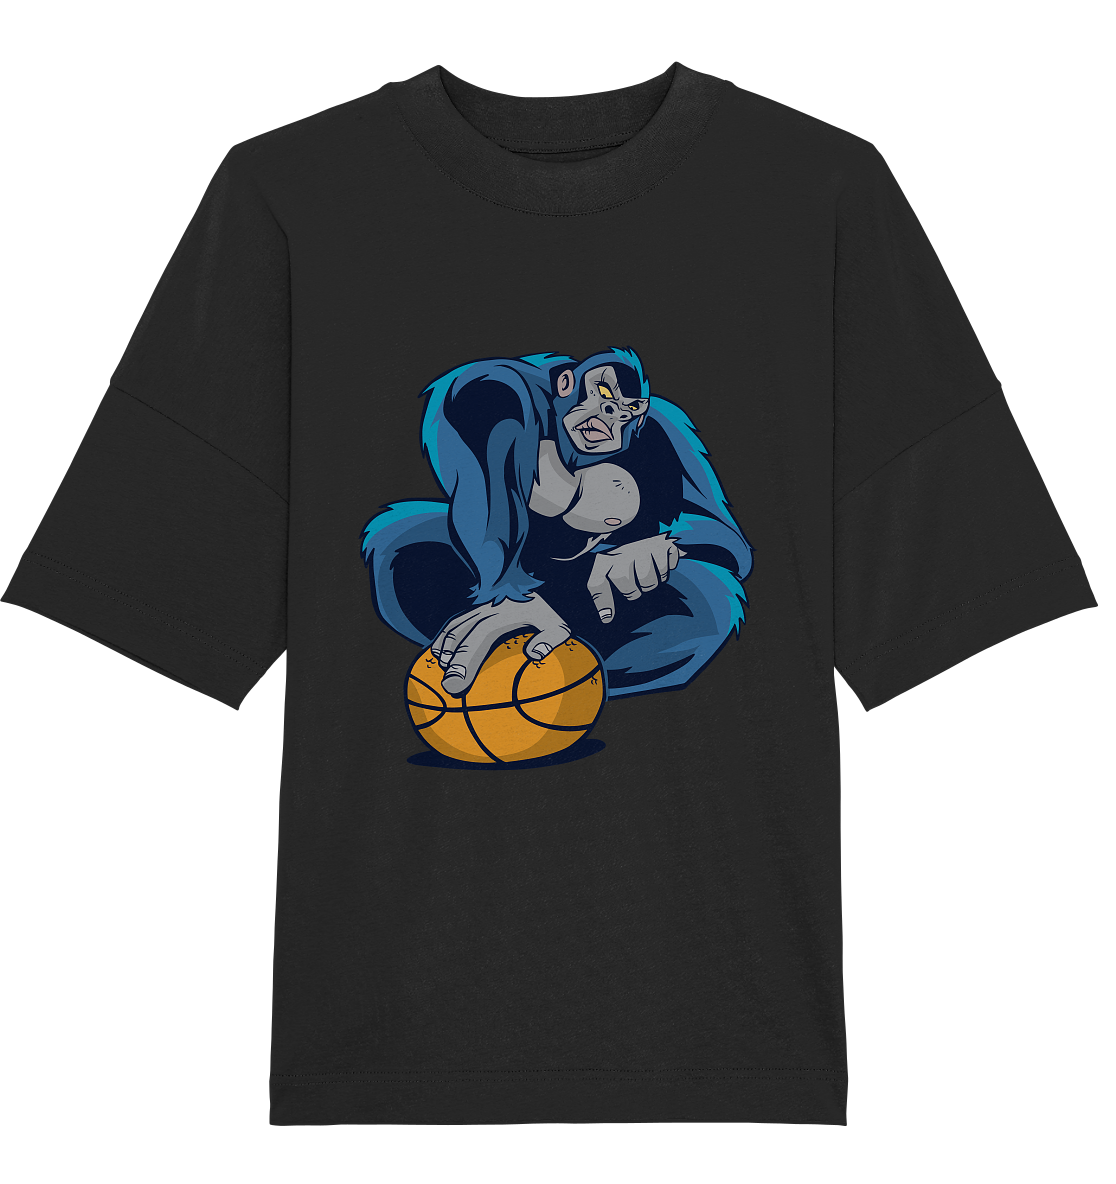 Basketball Gorilla - Organic Oversize Shirt